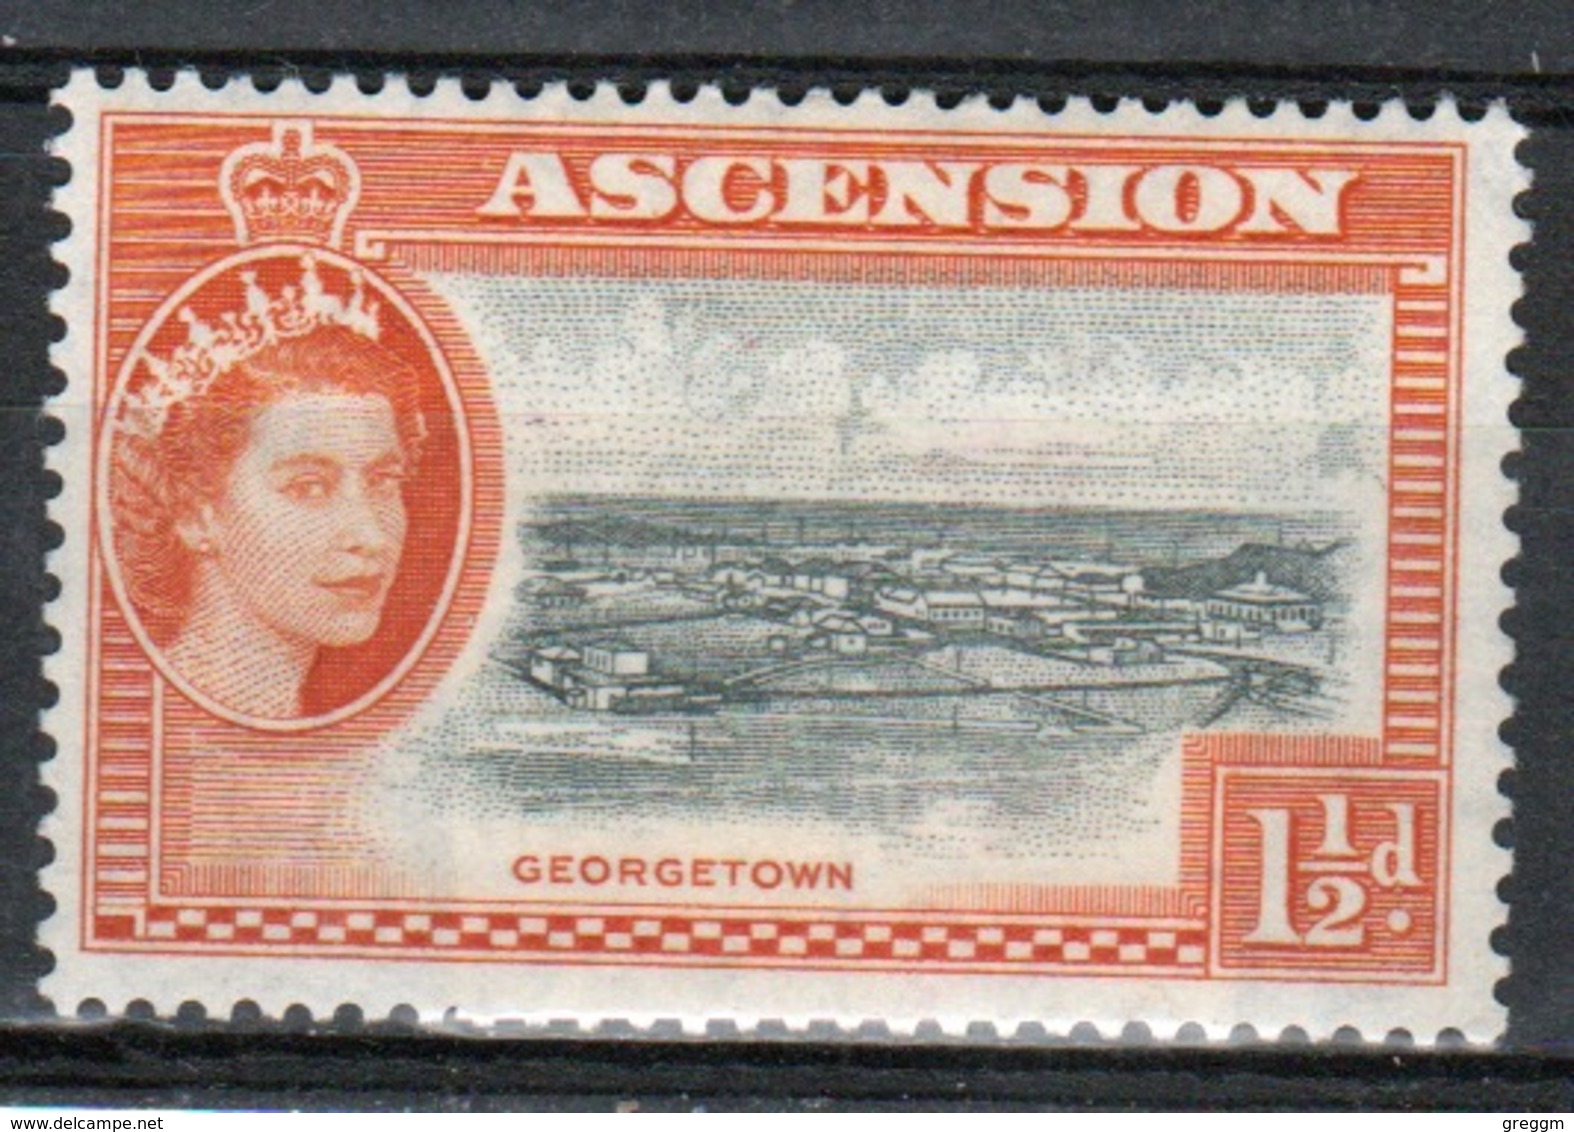 Ascension Queen Elizabeth  Mounted Mint 1½d Stamp From 1956 Definitive Set. - Ascension